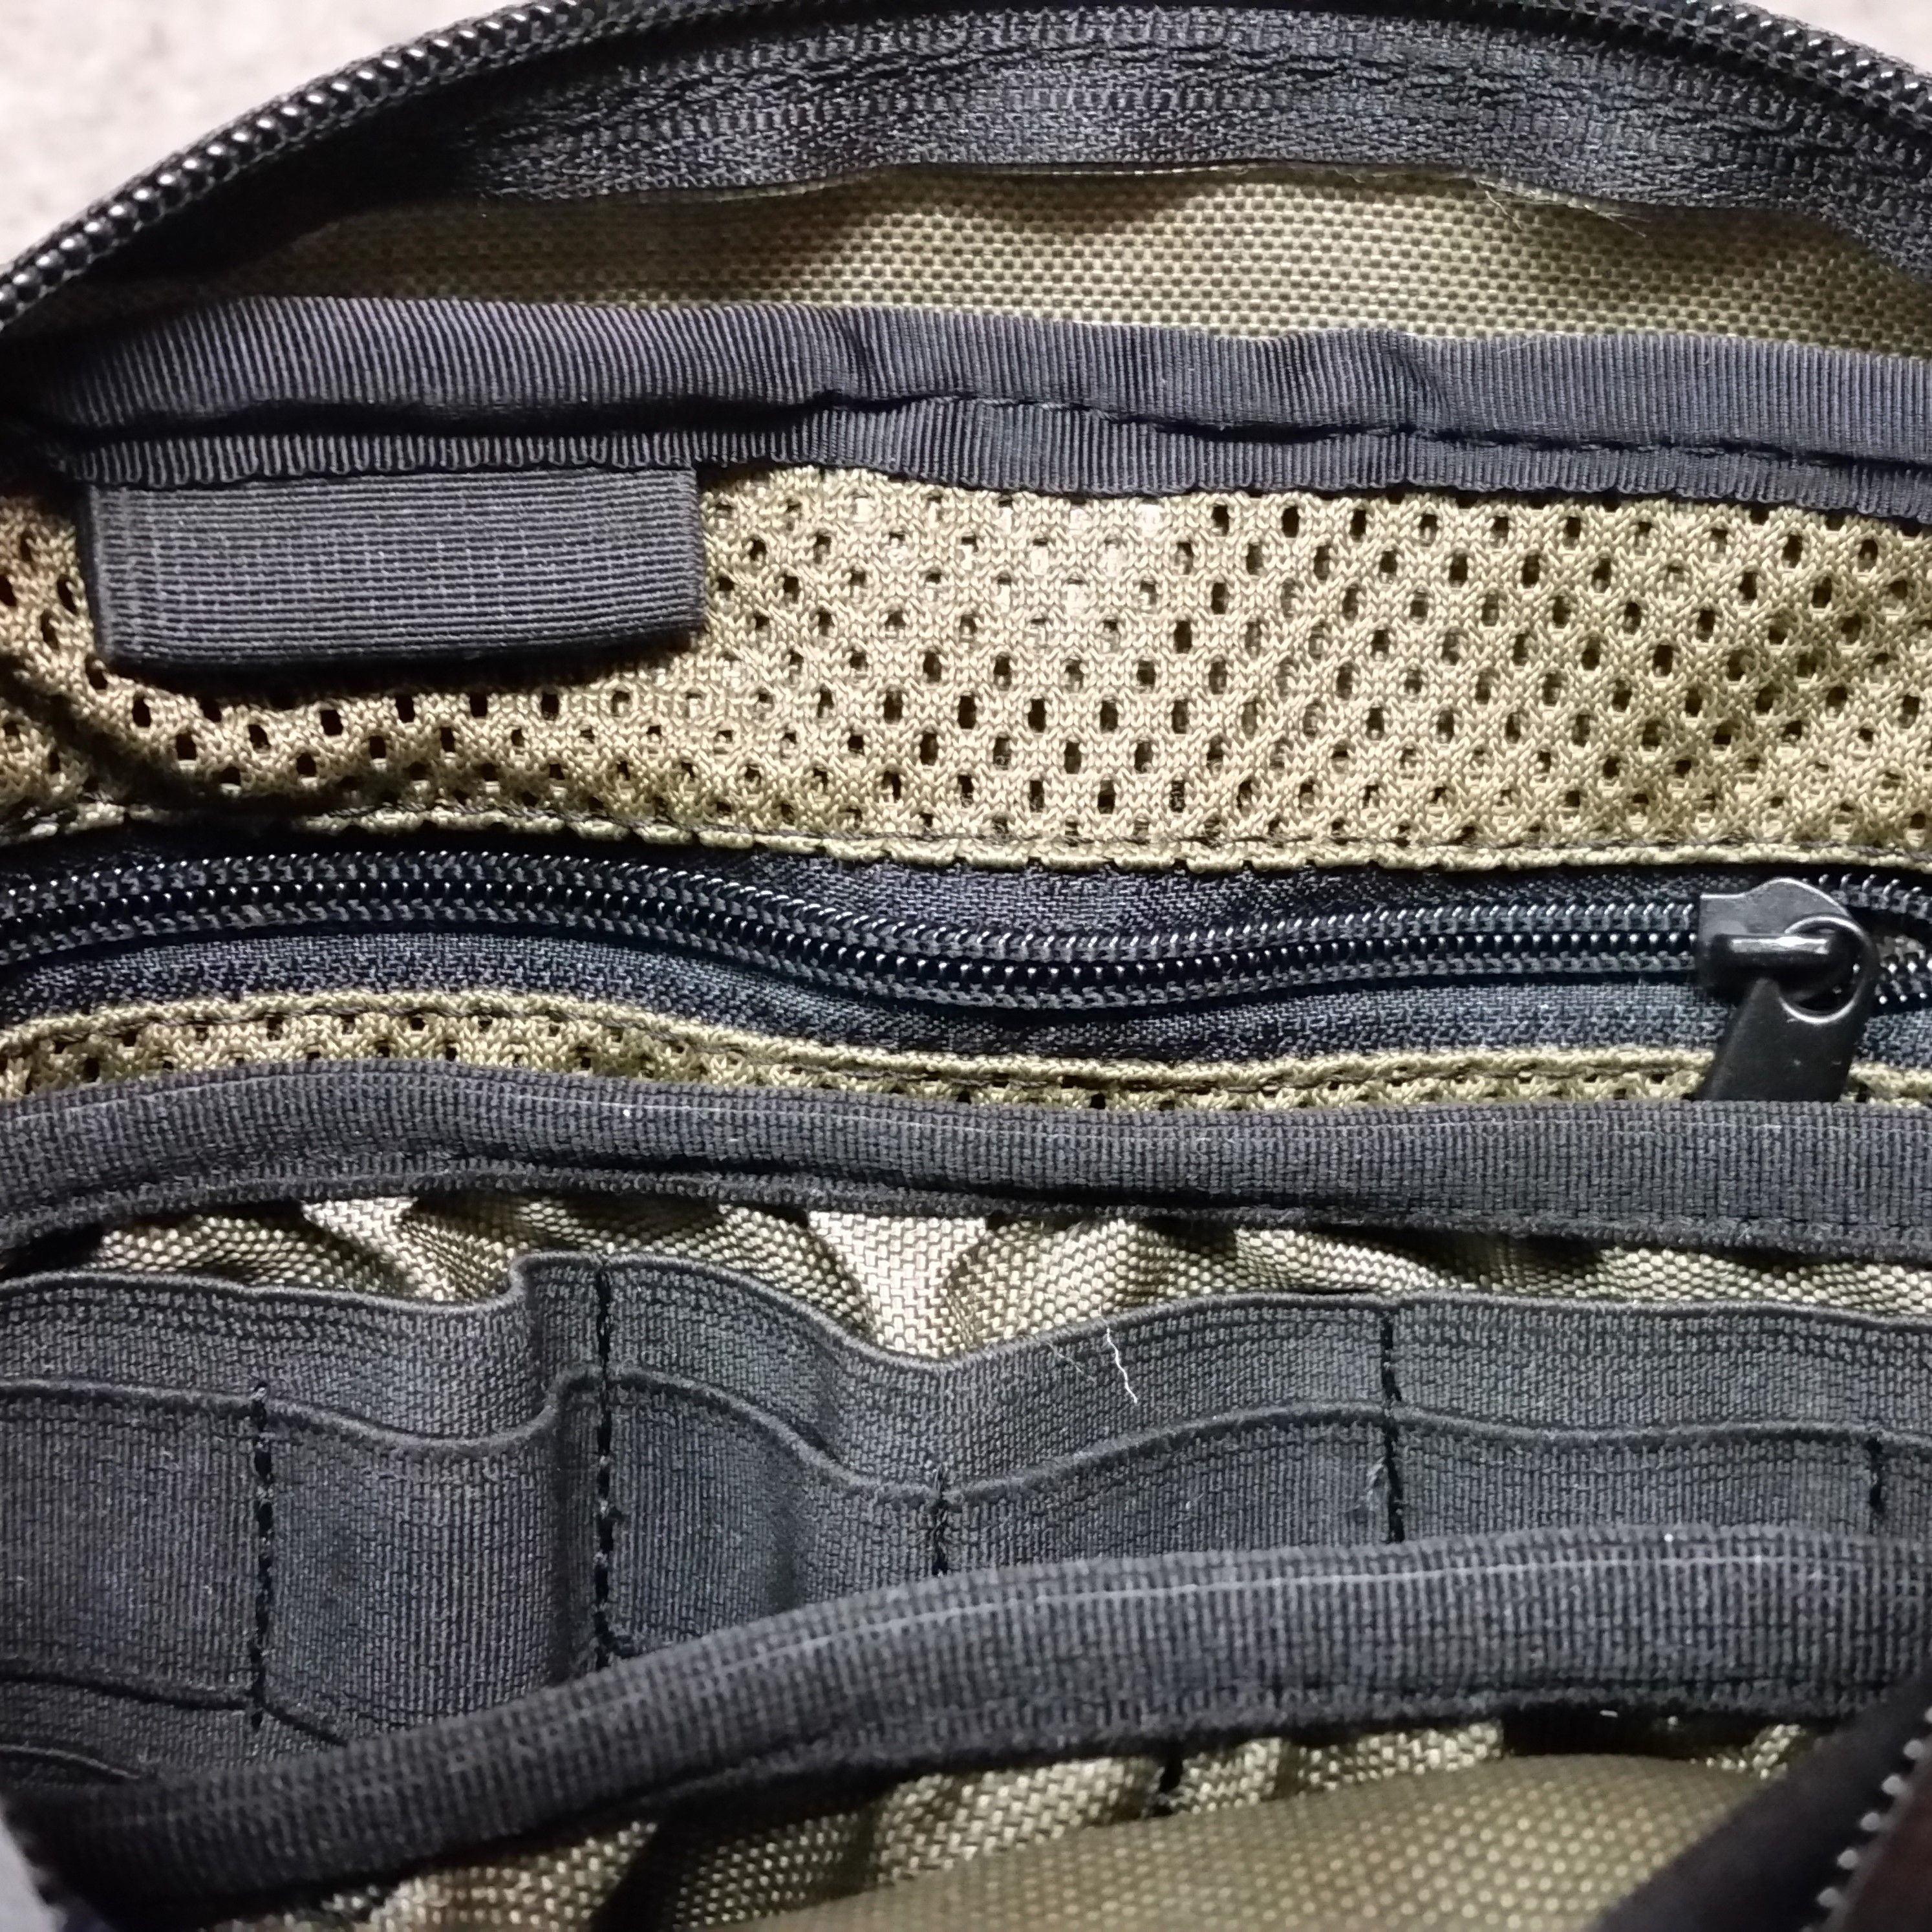 Pocket with zipper closure under standard pocket +12pln